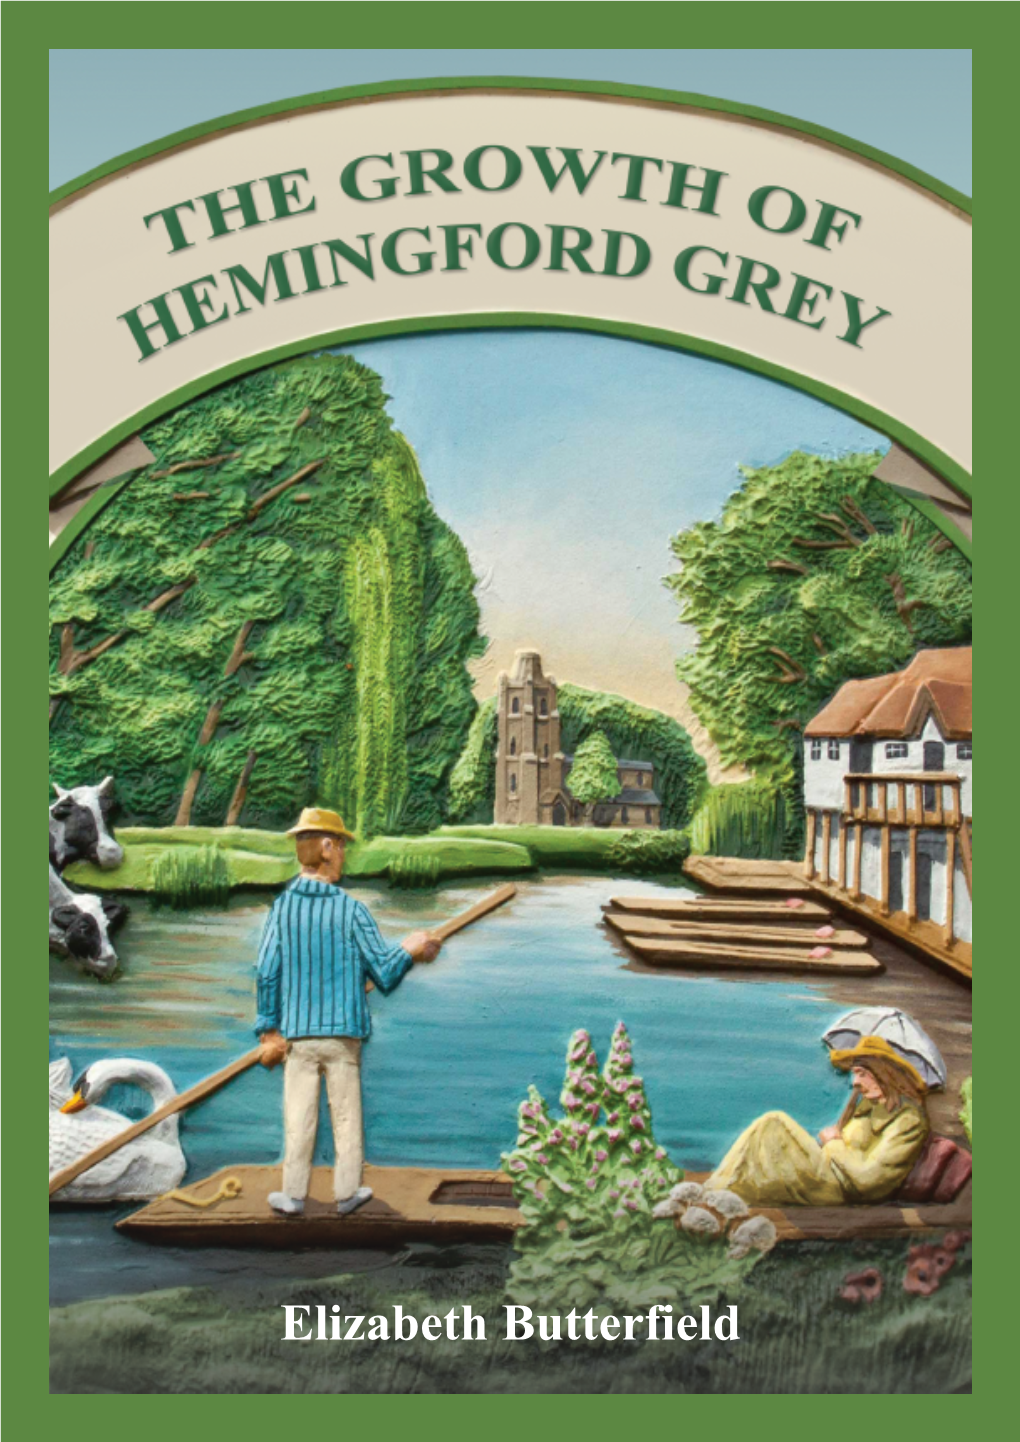 "The Growth of Hemingford Grey" by Elizabeth Butterfield